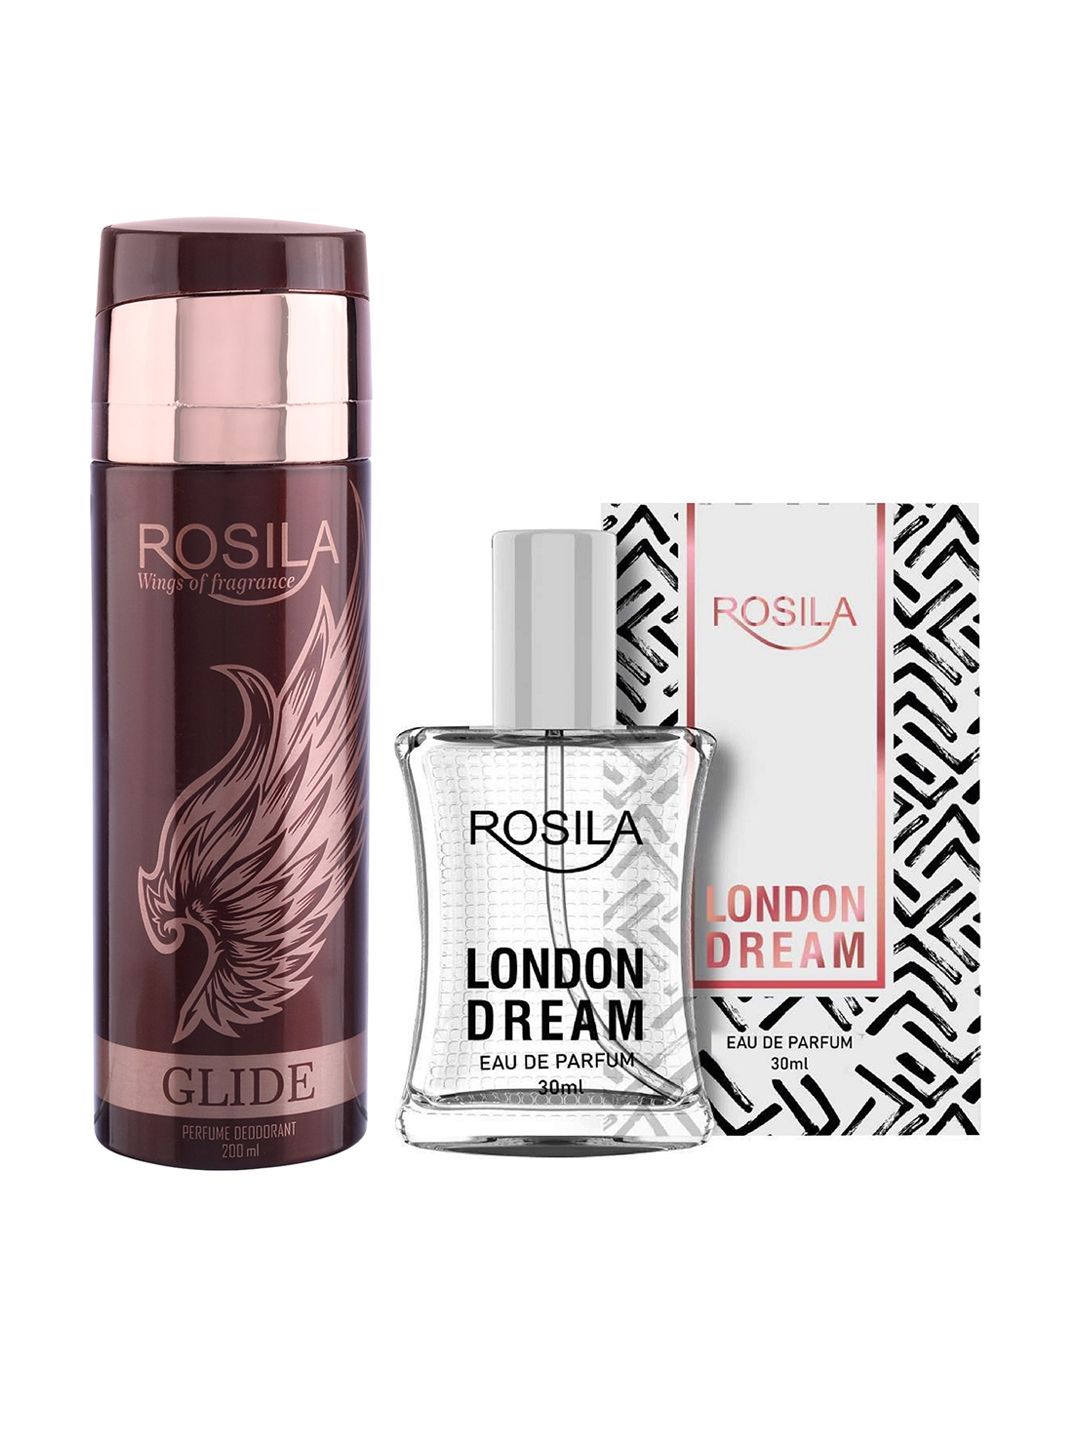 ROSILA Glide Deodorant Body Spray 200ml With London Dreams Perfumee EDP 30ml Price in India